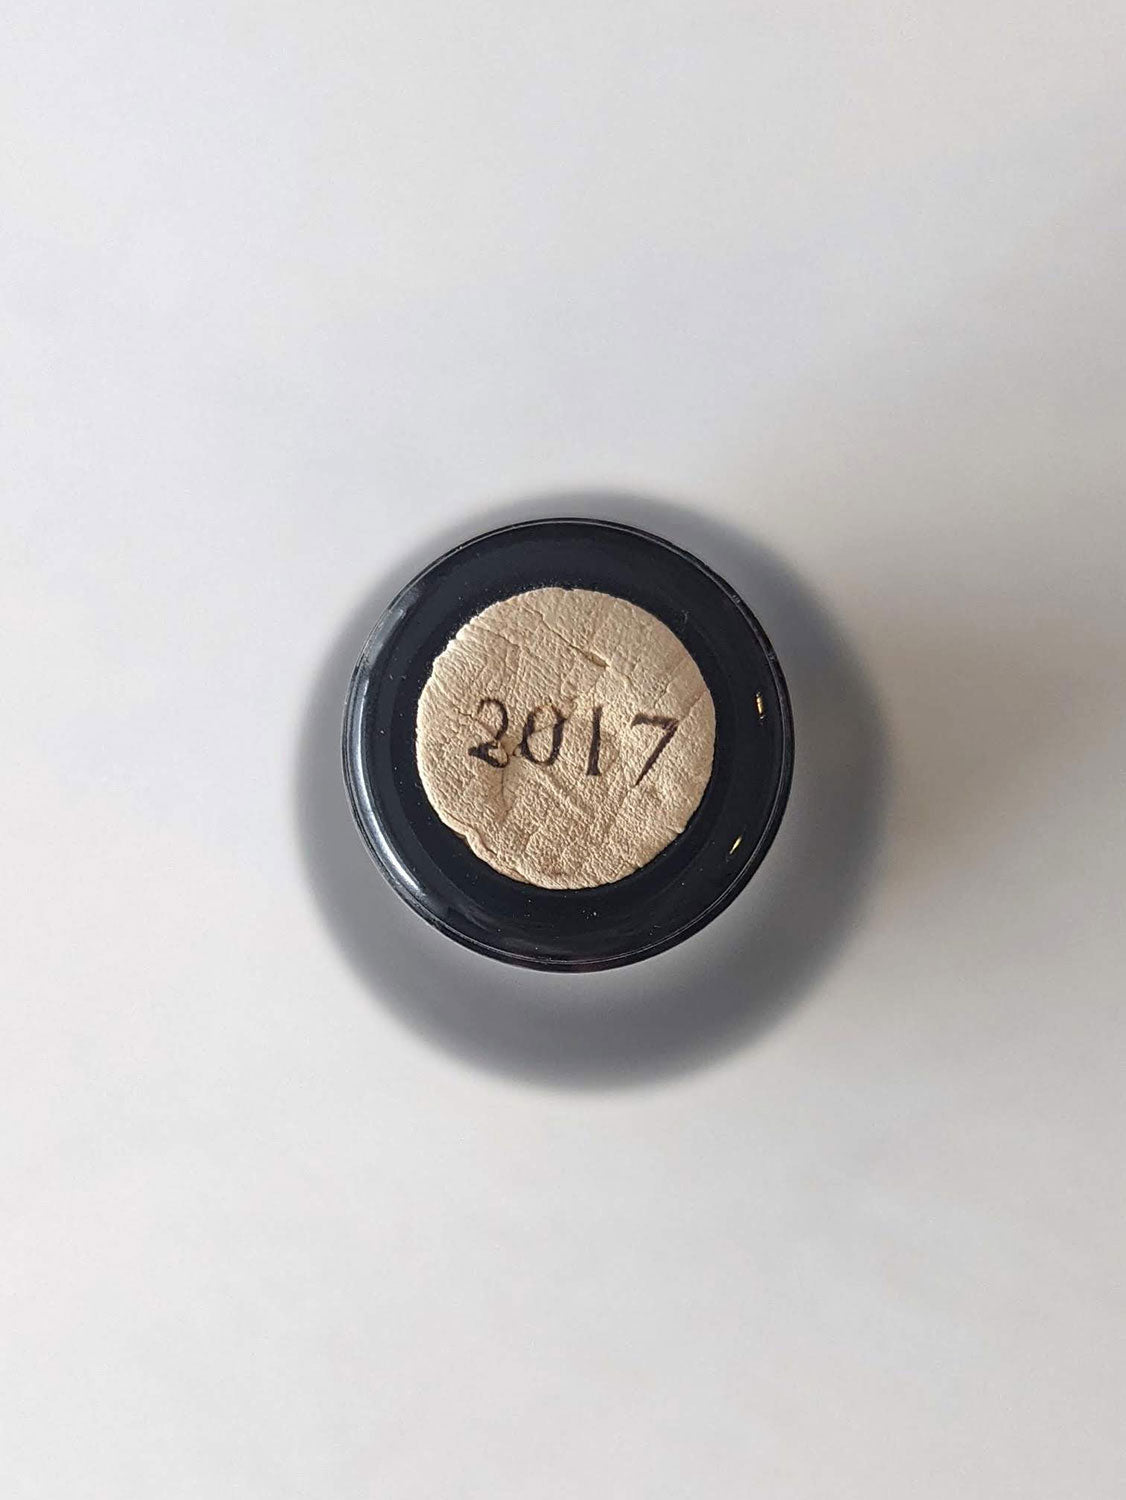 Terragena | Single Barrel Pinot Noir Pommard clone 2017　テラジェナ　シングル・バレル　ピノ・ノワール　ポマール・クローン